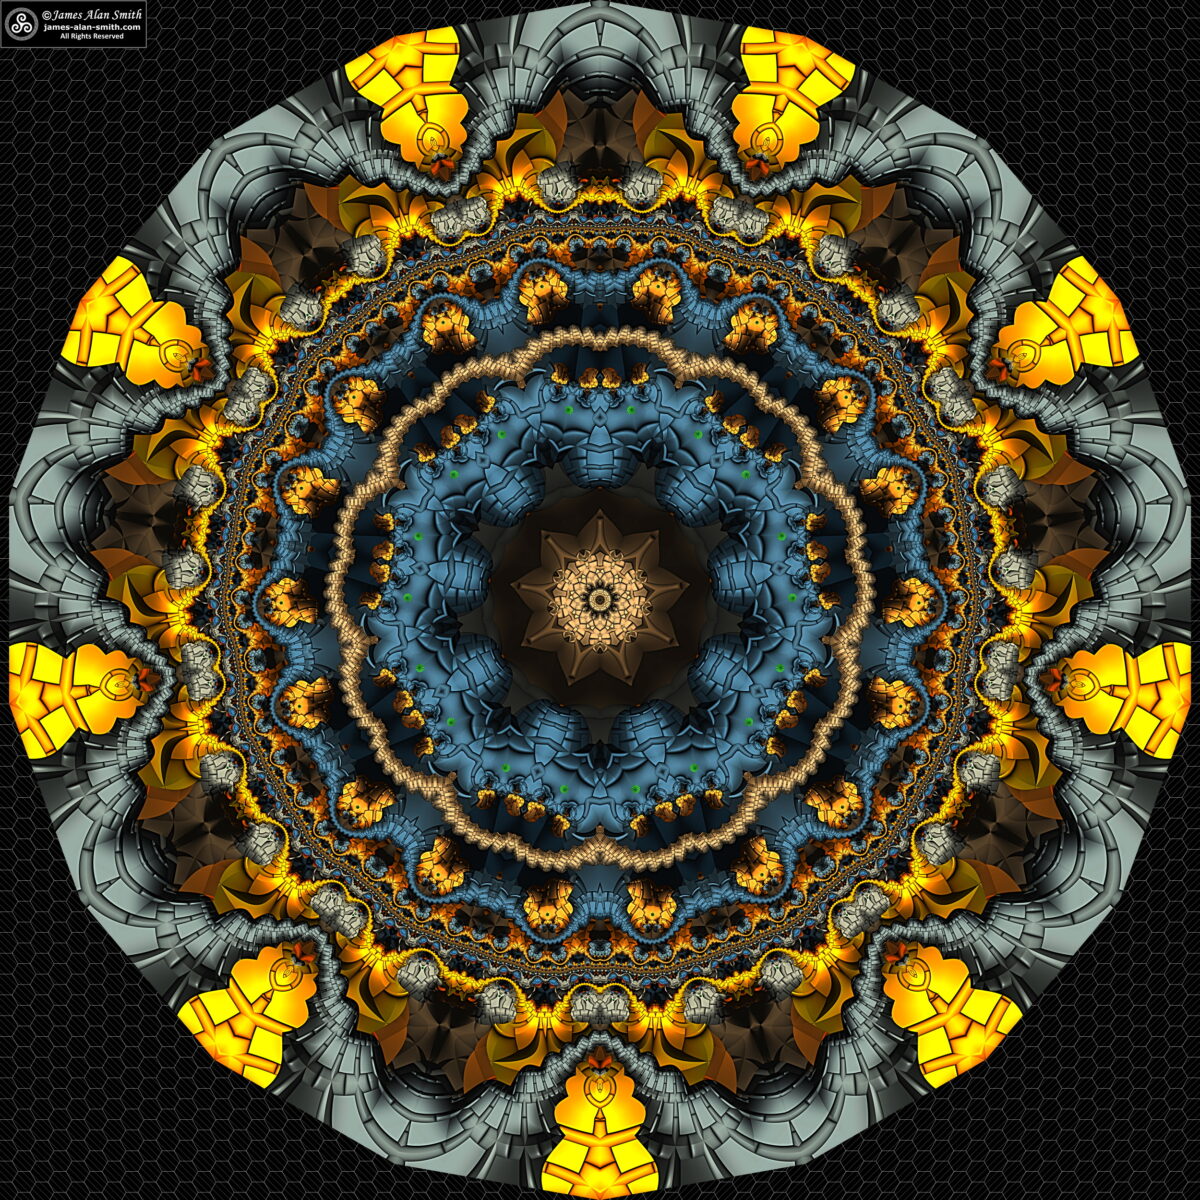 Unusual Mandala Series #051021: Artwork by James Alan Smith